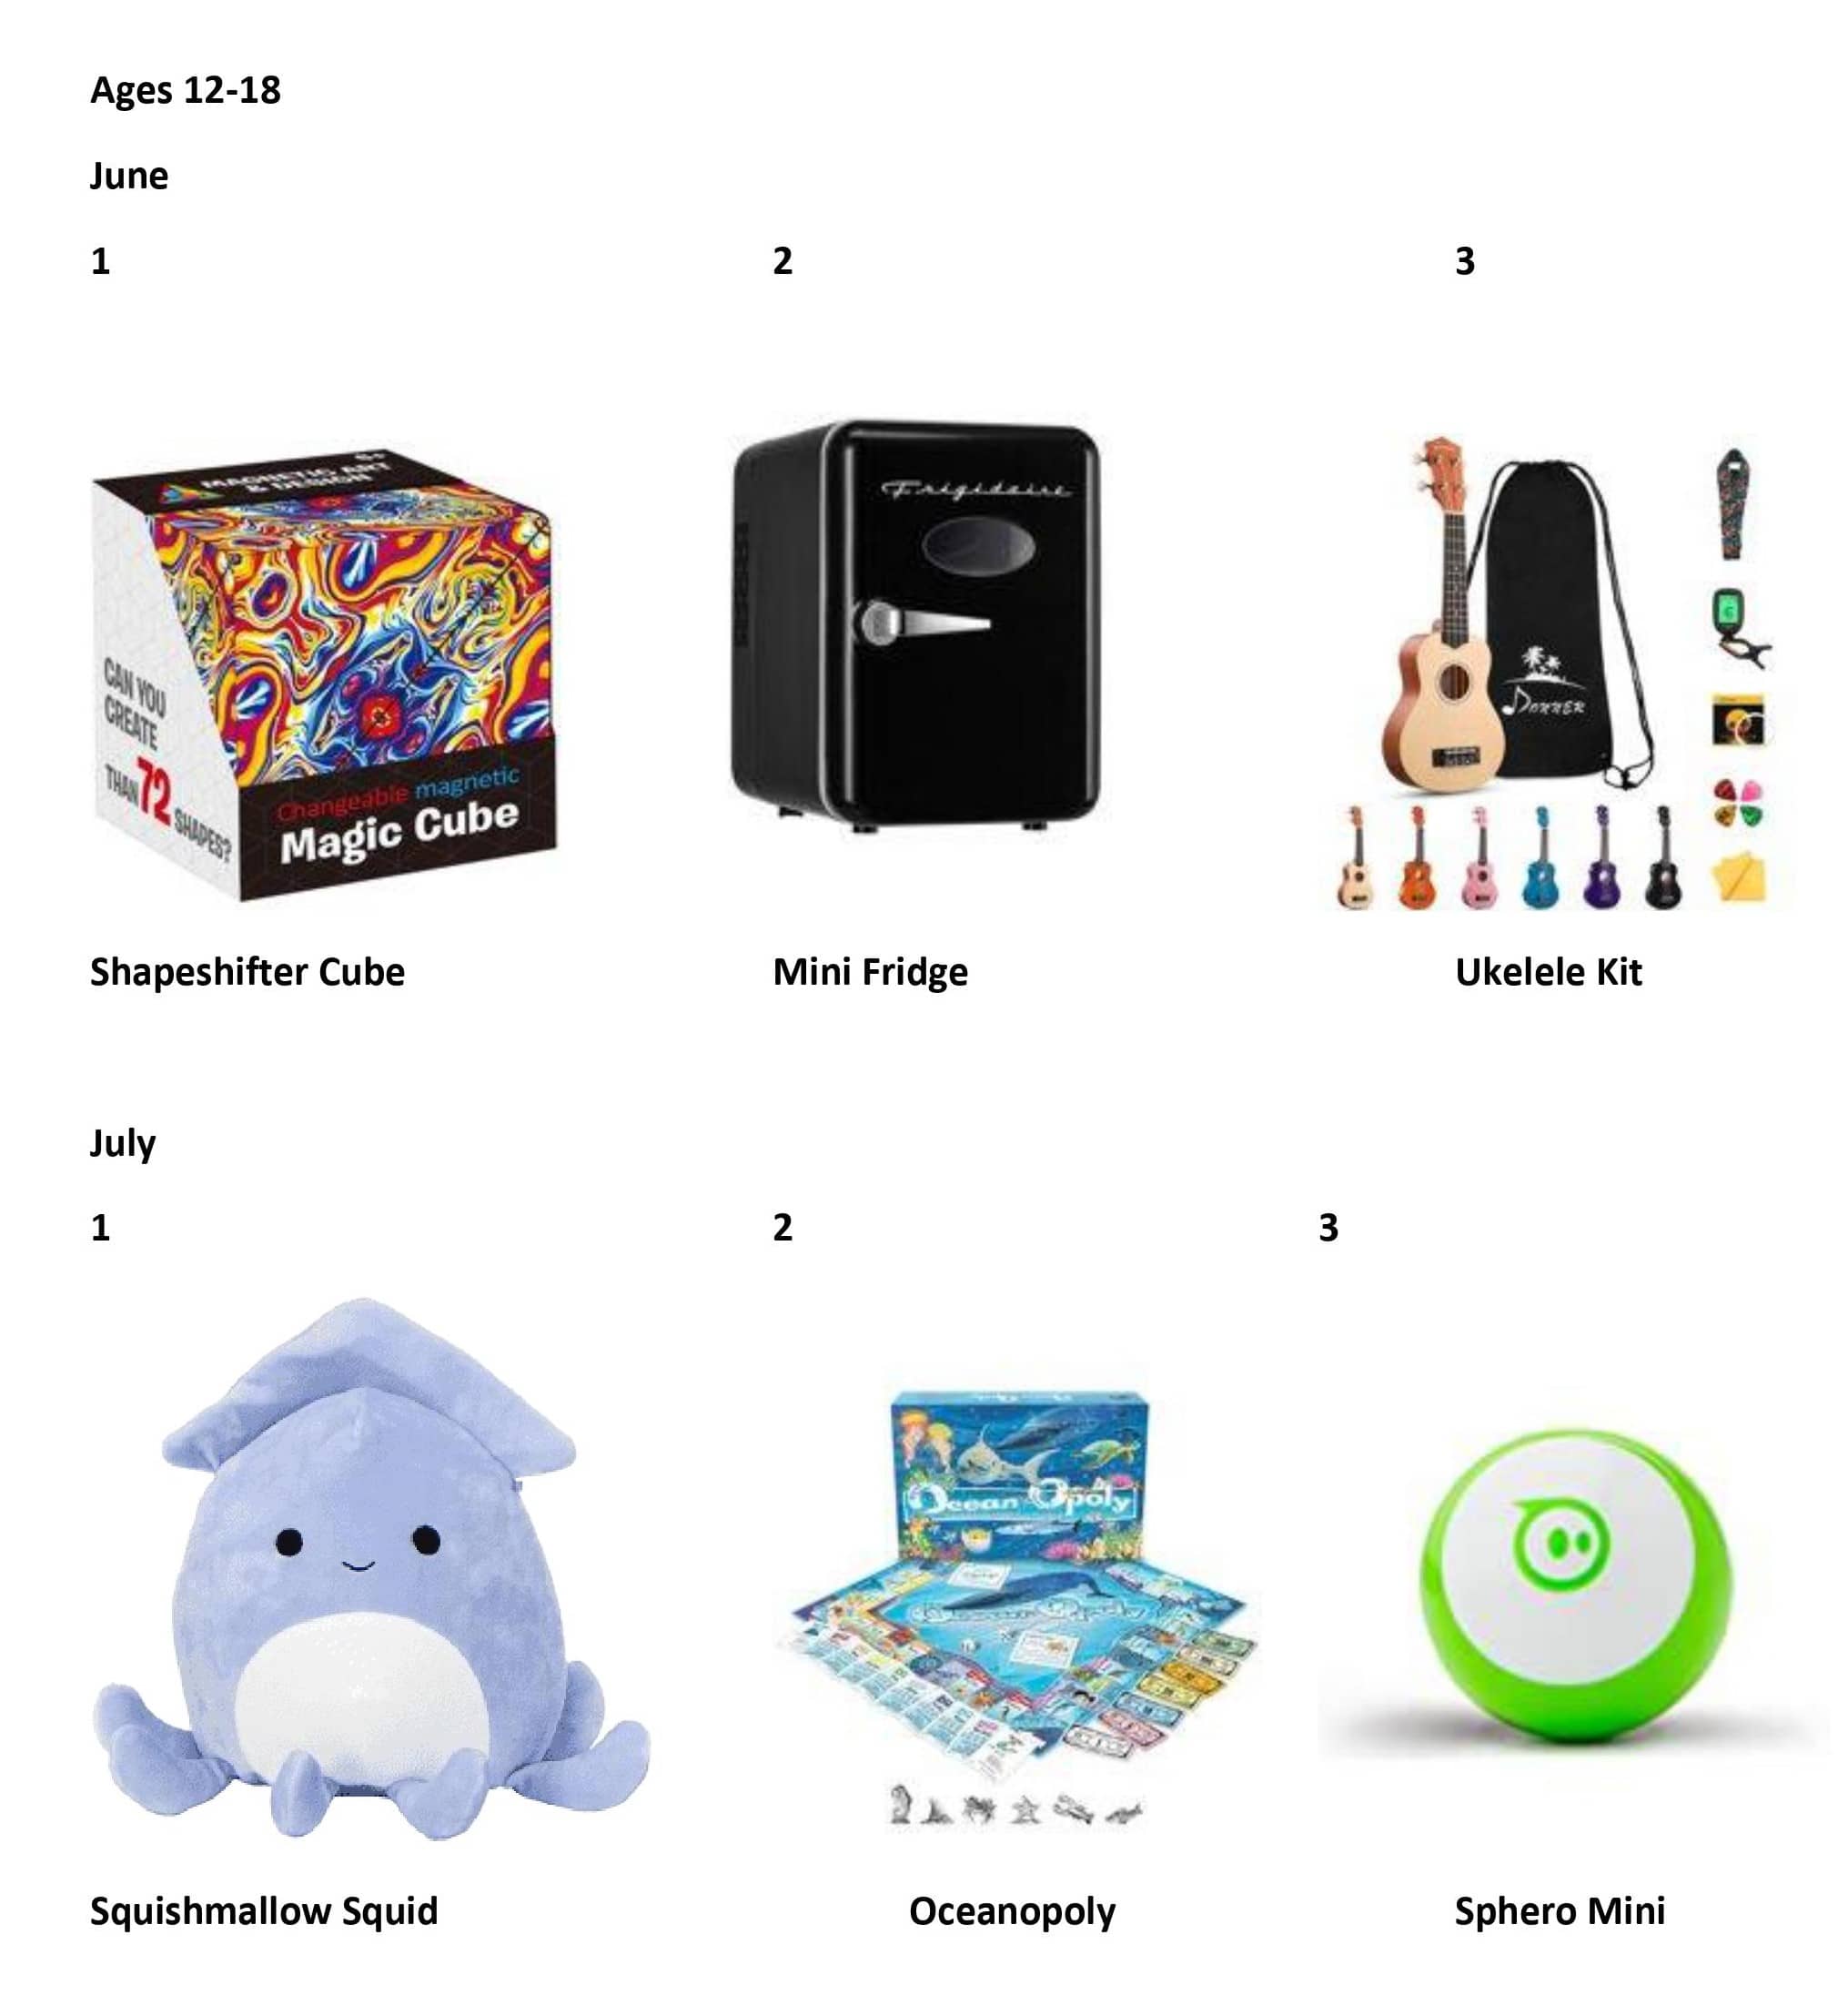 ages 12-18 shapeshifter cube mini fridge ukulele kit sqishmallow squid oceanopoly sphero mini